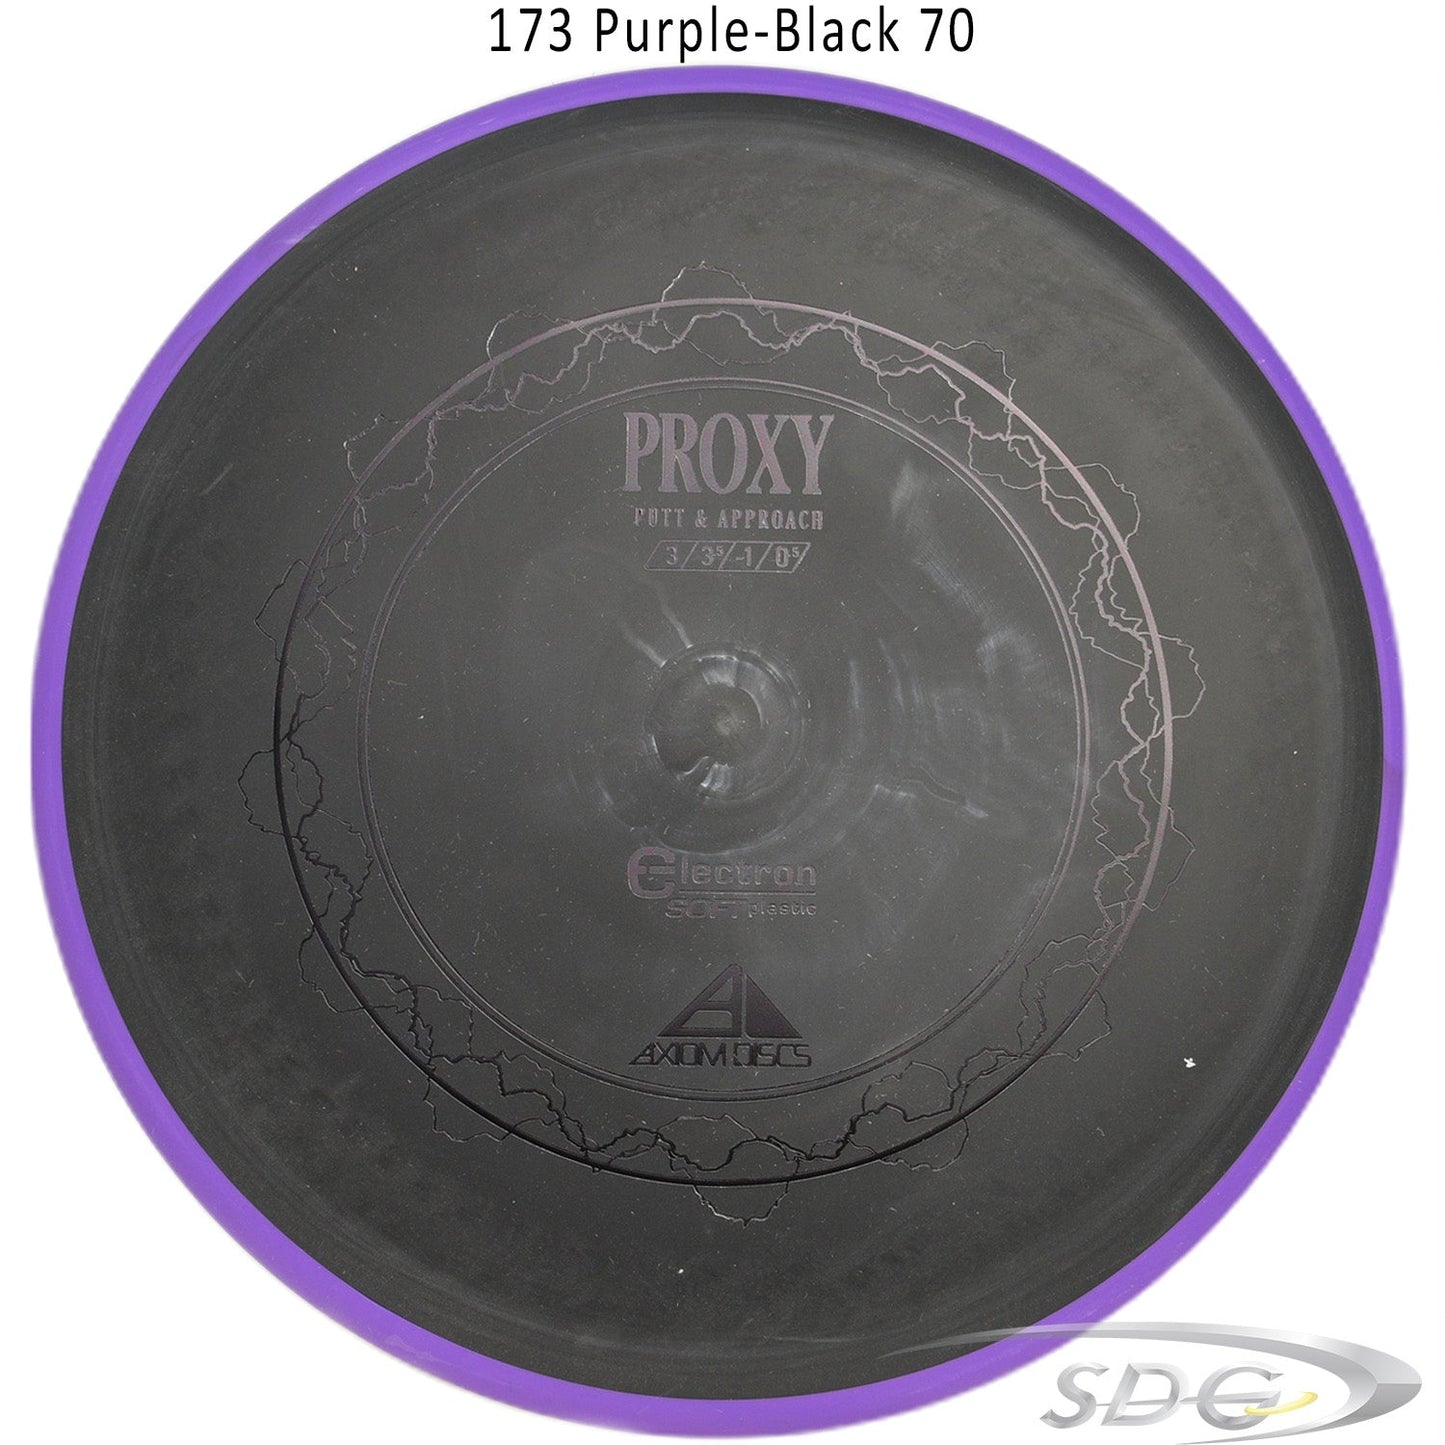 axiom-electron-proxy-soft-disc-golf-putt-approach 173 Black-Purple 70 